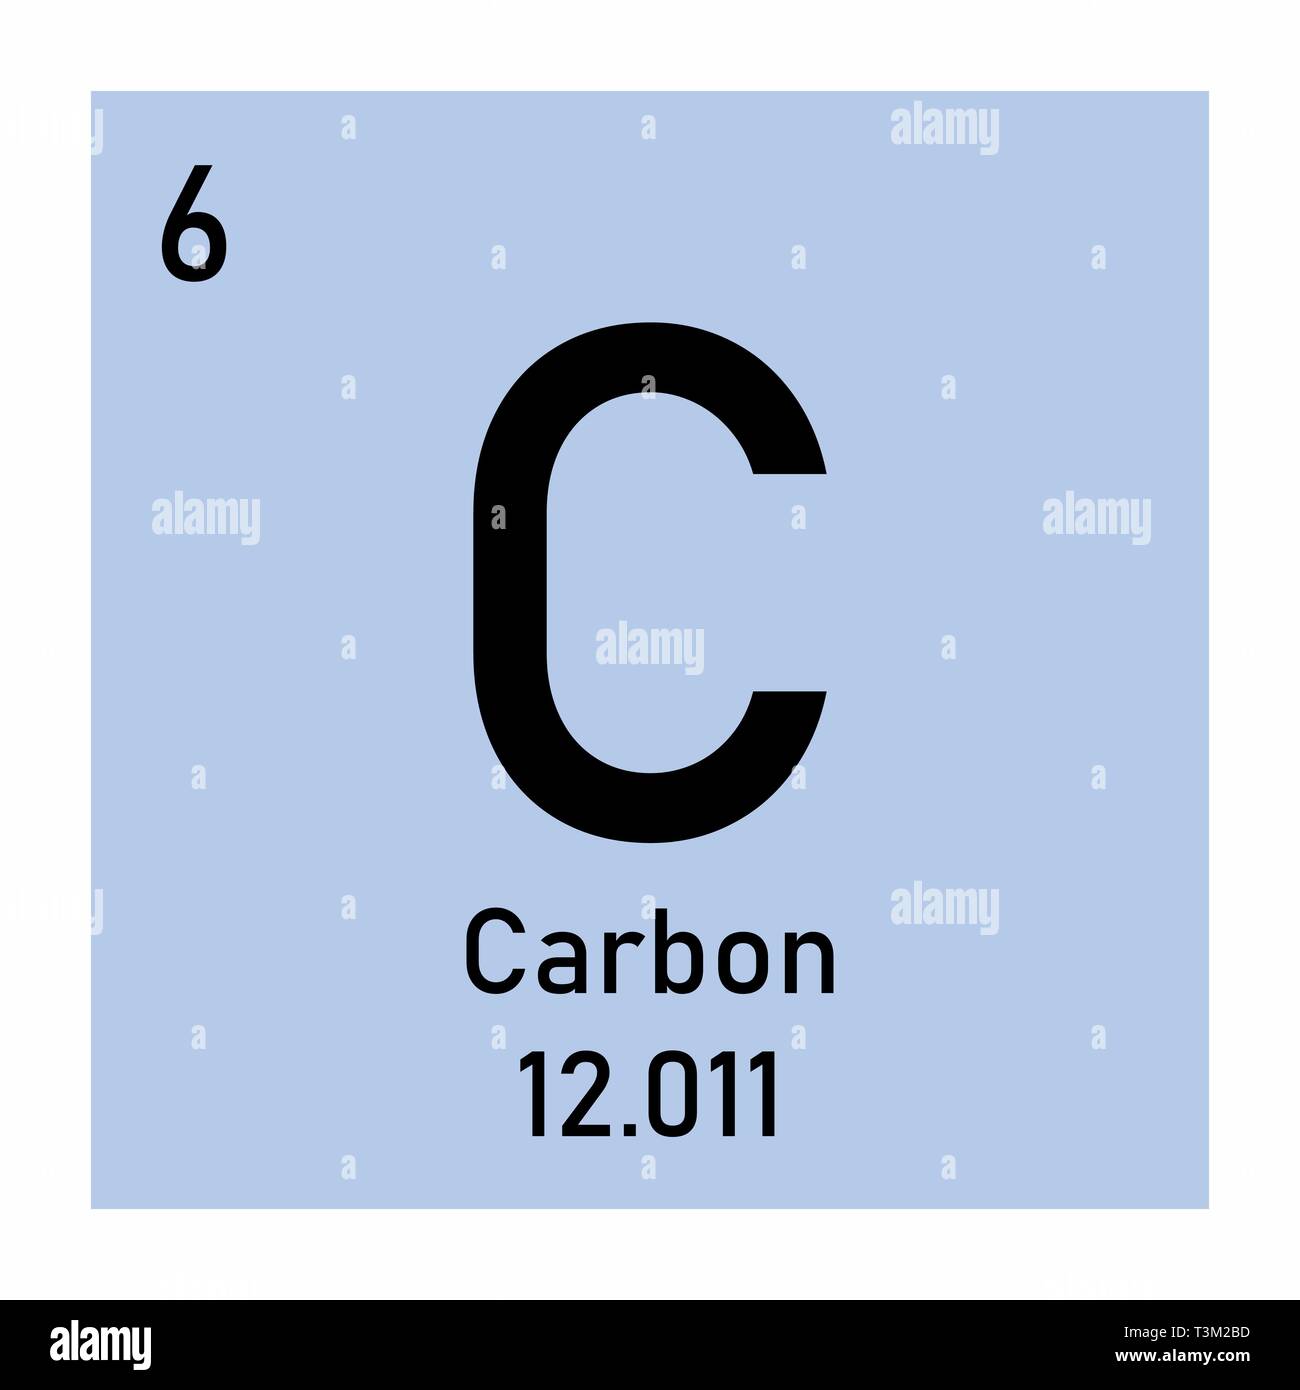 carbon an element